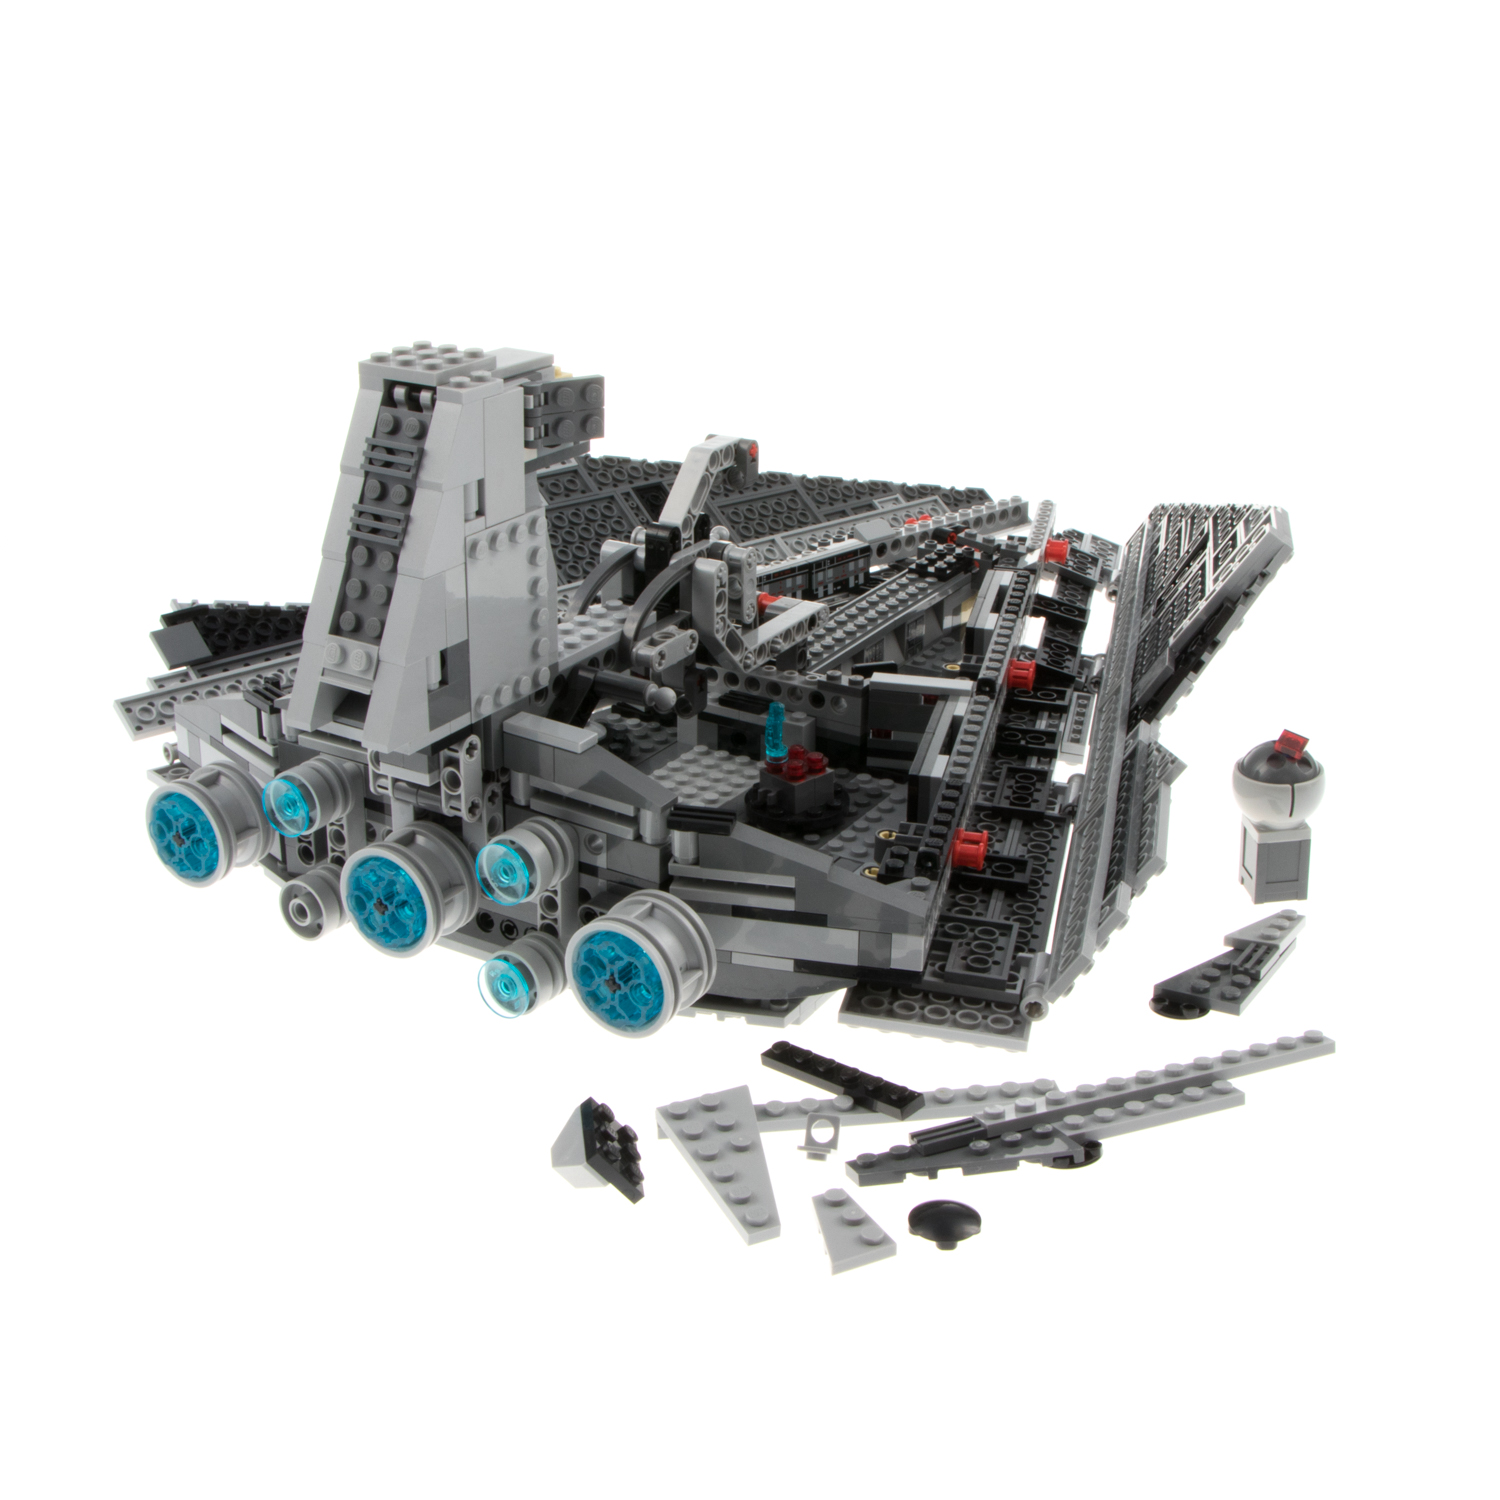 tro Integration Hearty 1x Lego Set Star Wars Imperial Star Destroyer 75055 grau unvollständig